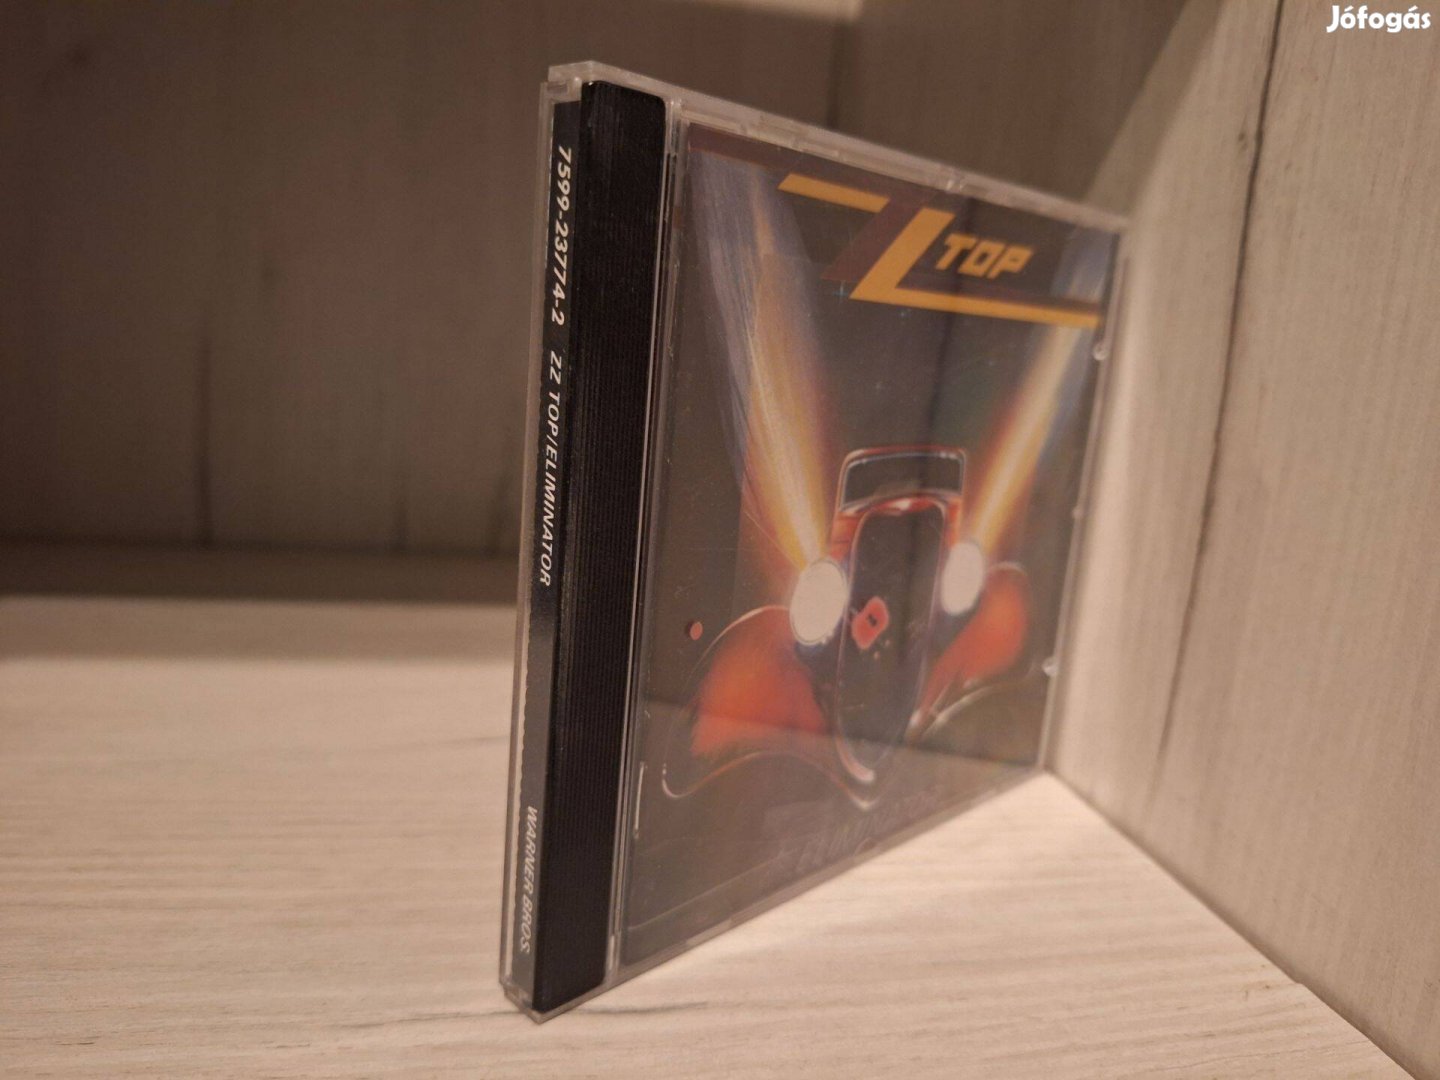 ZZ Top - Eliminator CD